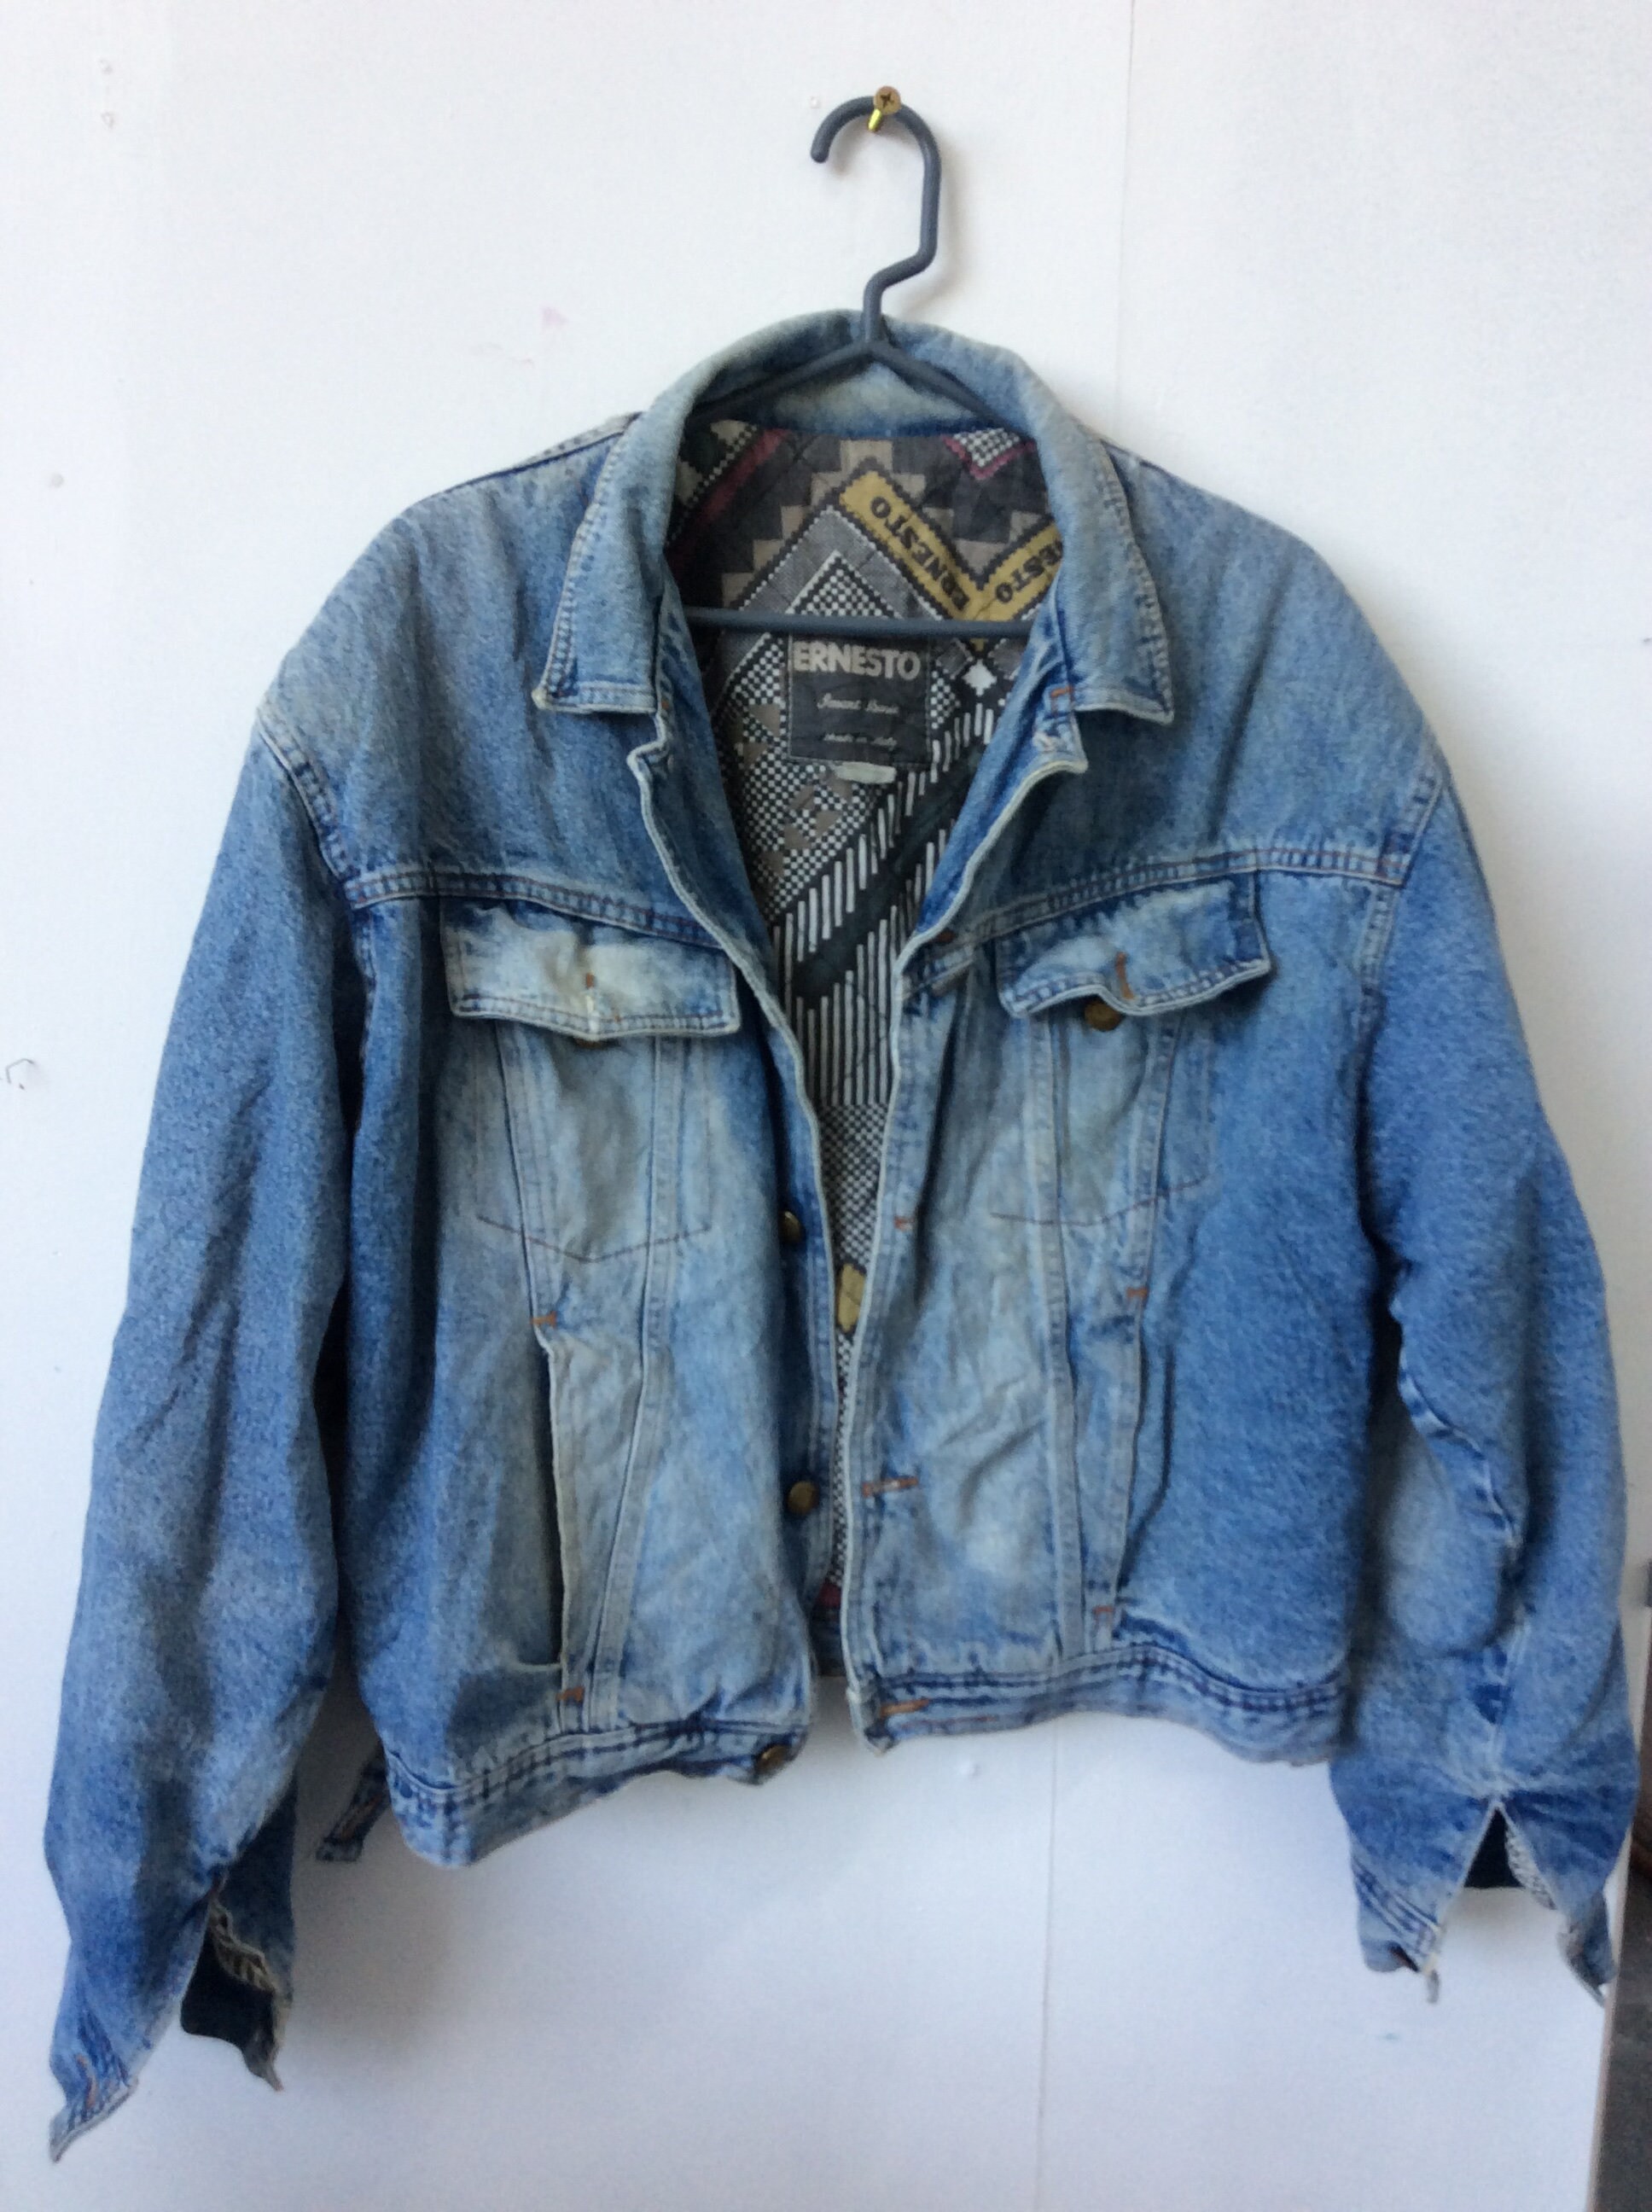 Vintage 80s Ernesto denim jeans jacket with inner lining | Etsy